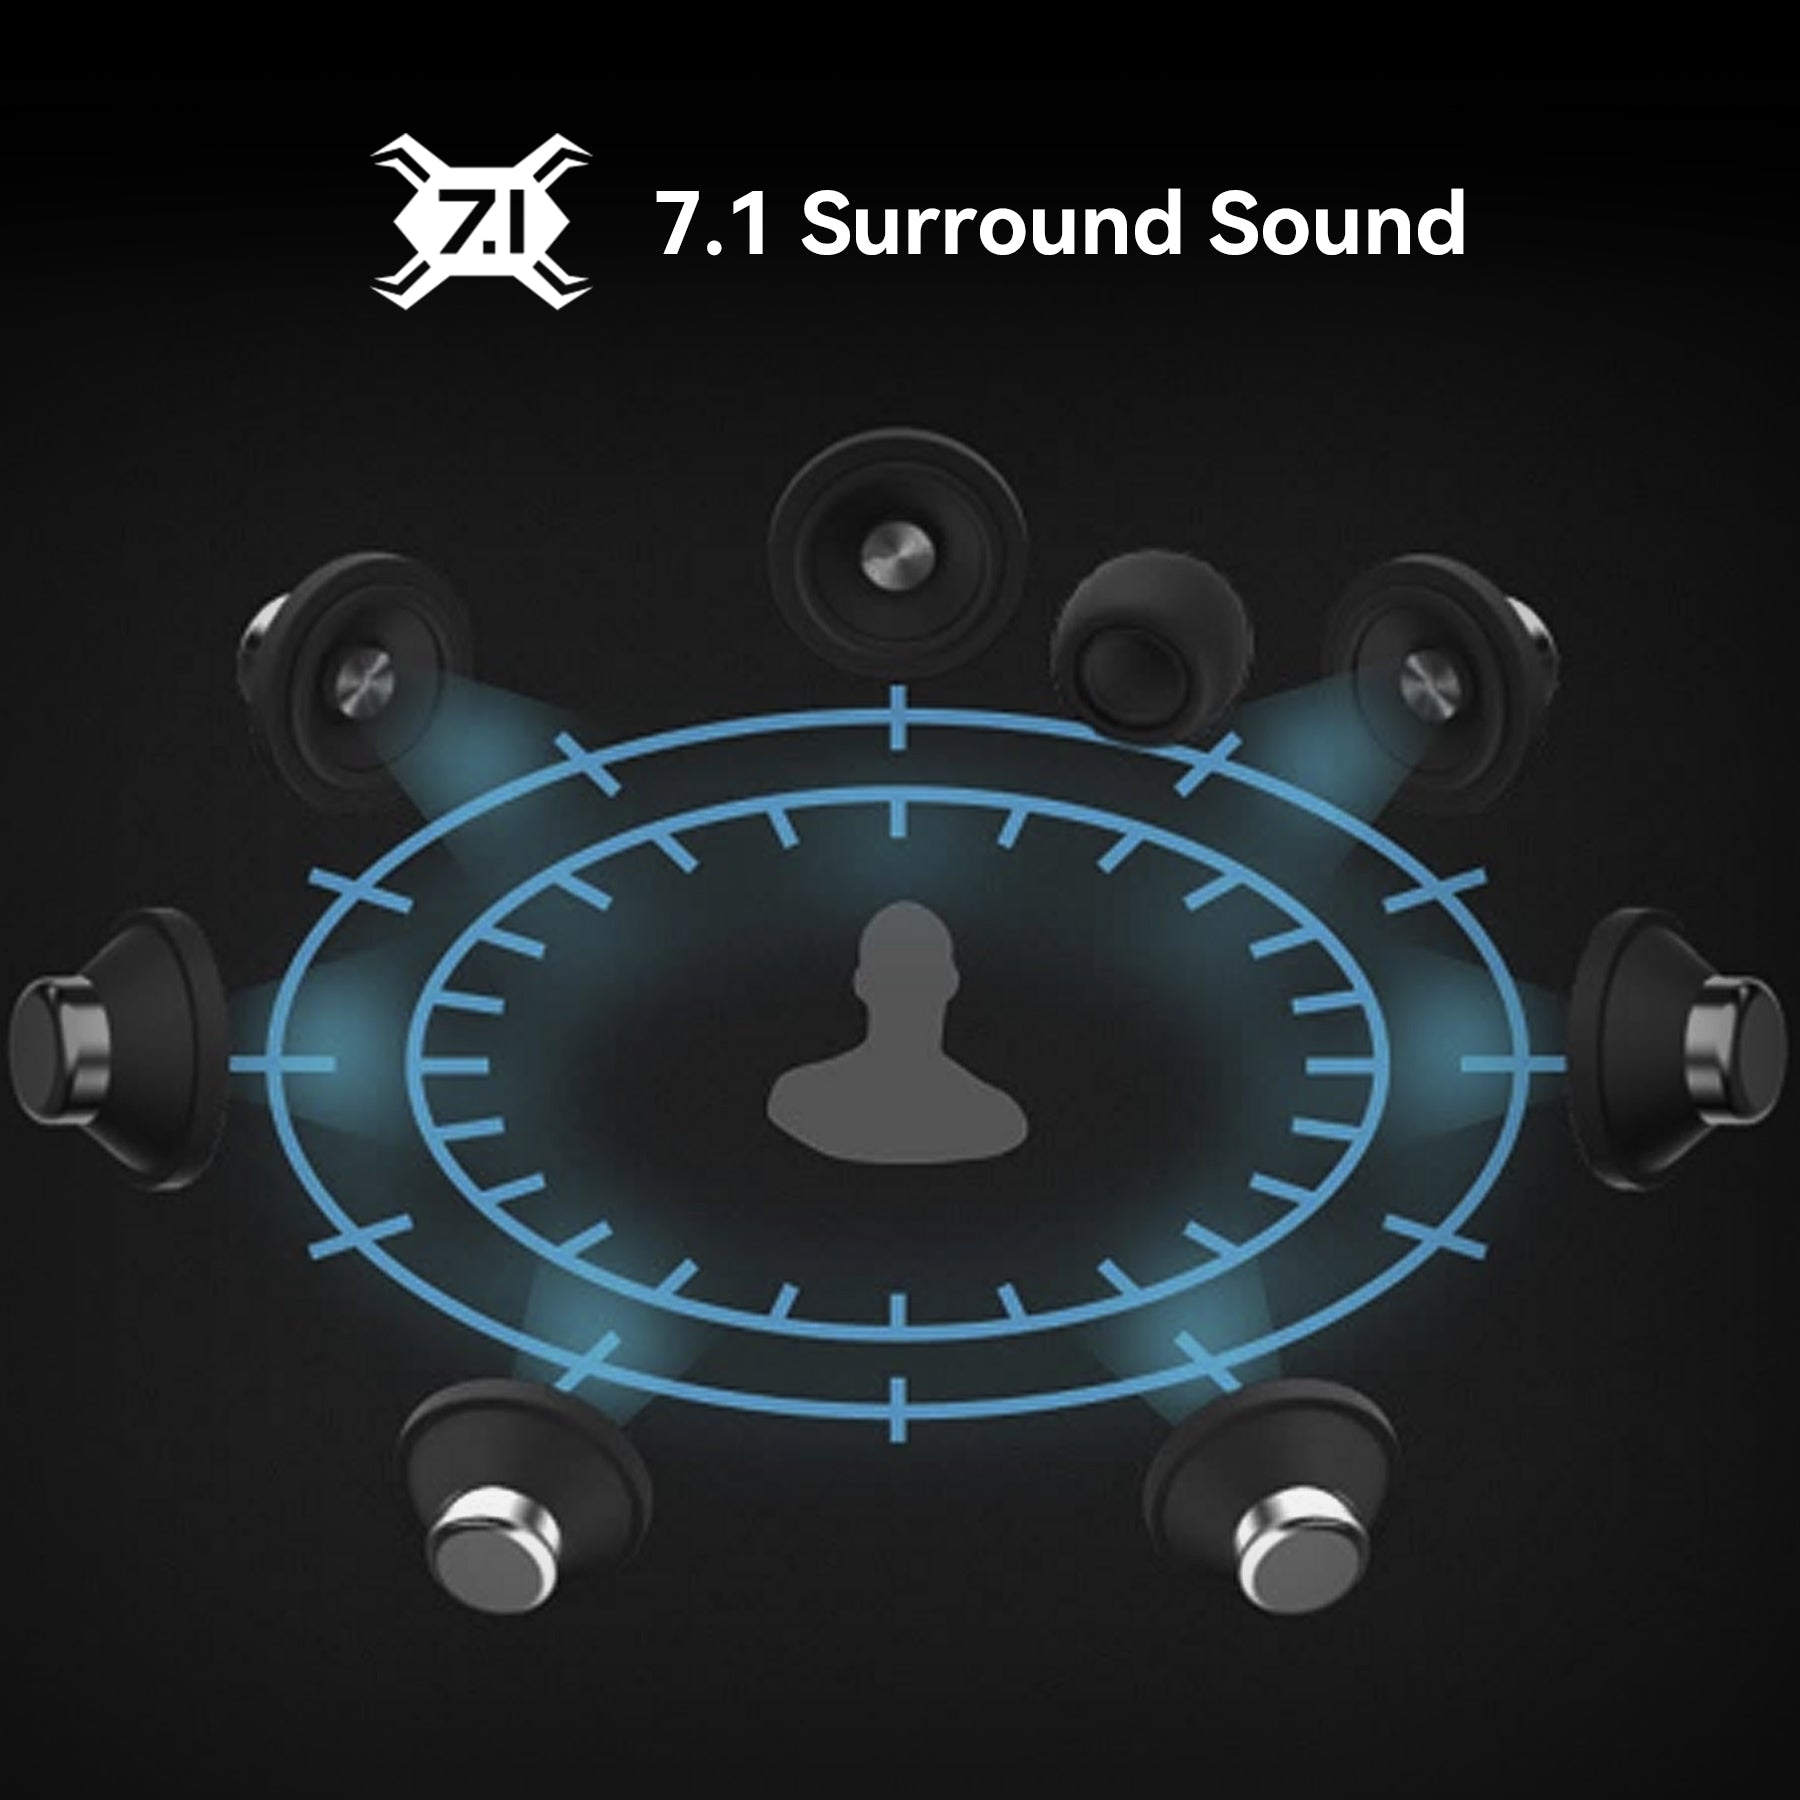 7.1 Surround Sound VS Traditional Stereo Sound